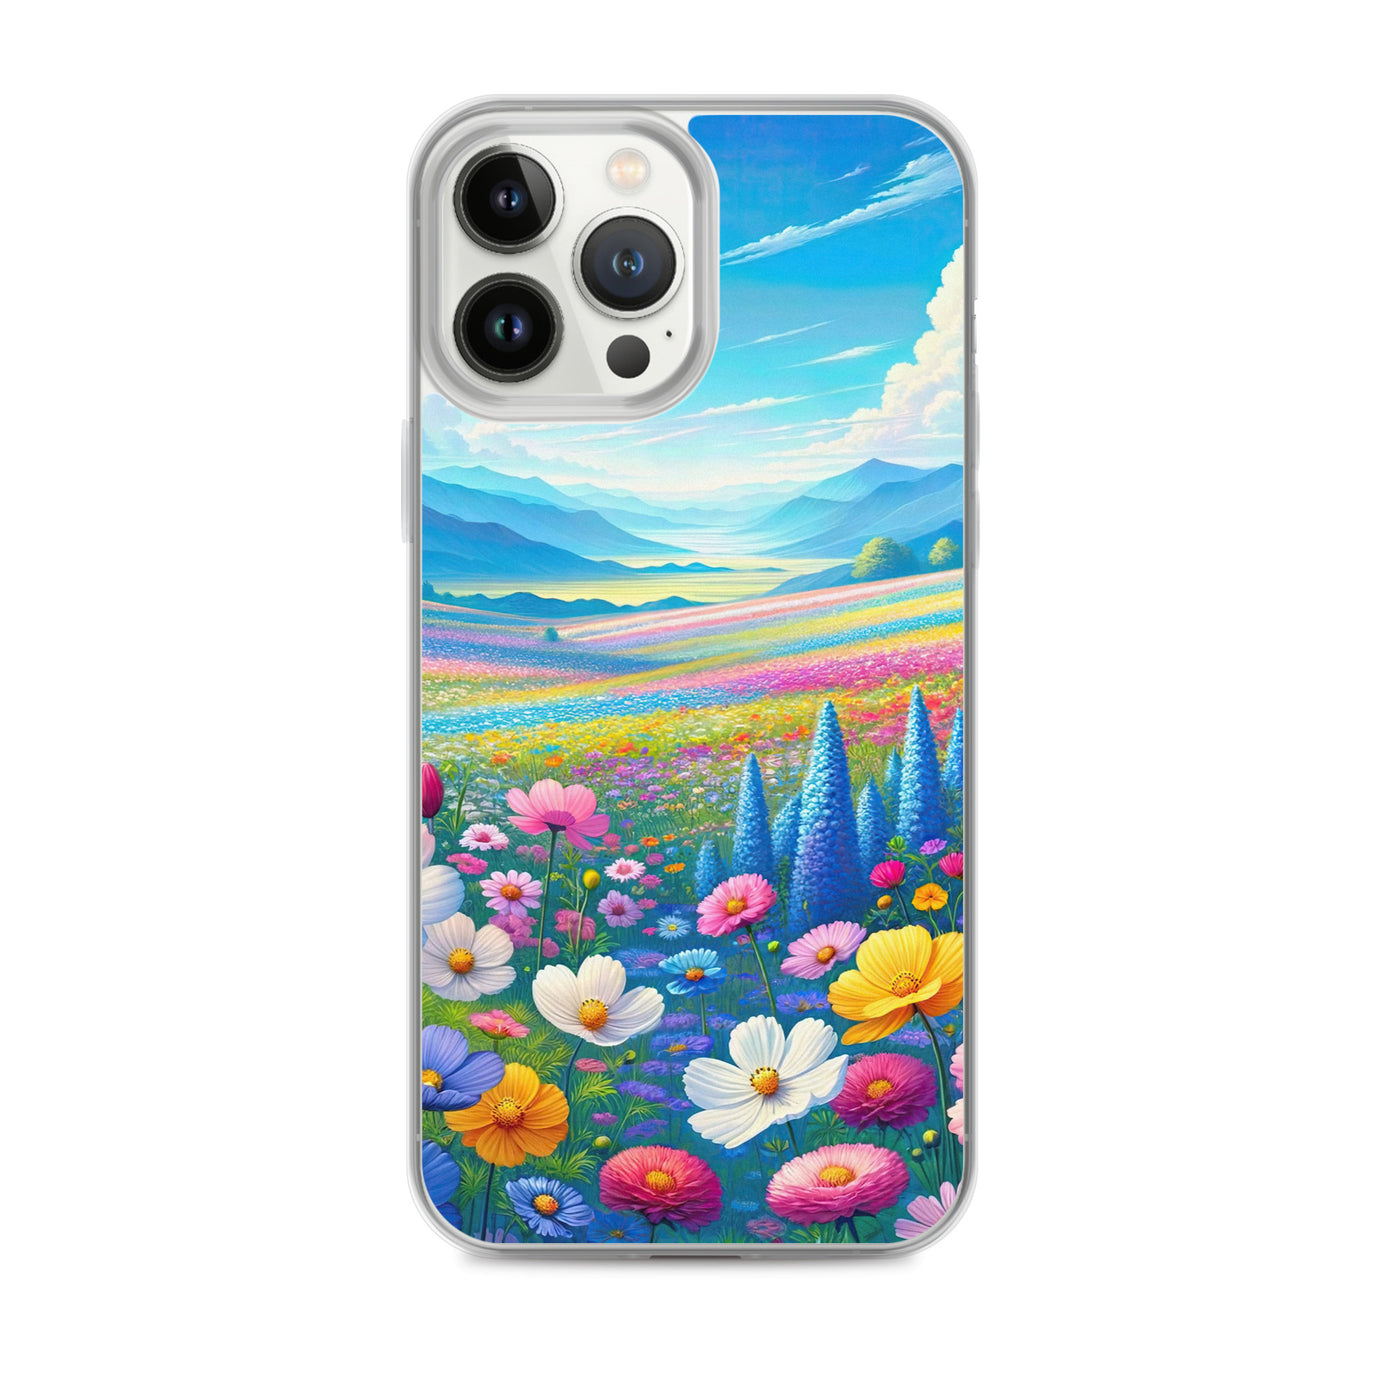 Weitläufiges Blumenfeld unter himmelblauem Himmel, leuchtende Flora - iPhone Schutzhülle (durchsichtig) camping xxx yyy zzz iPhone 13 Pro Max